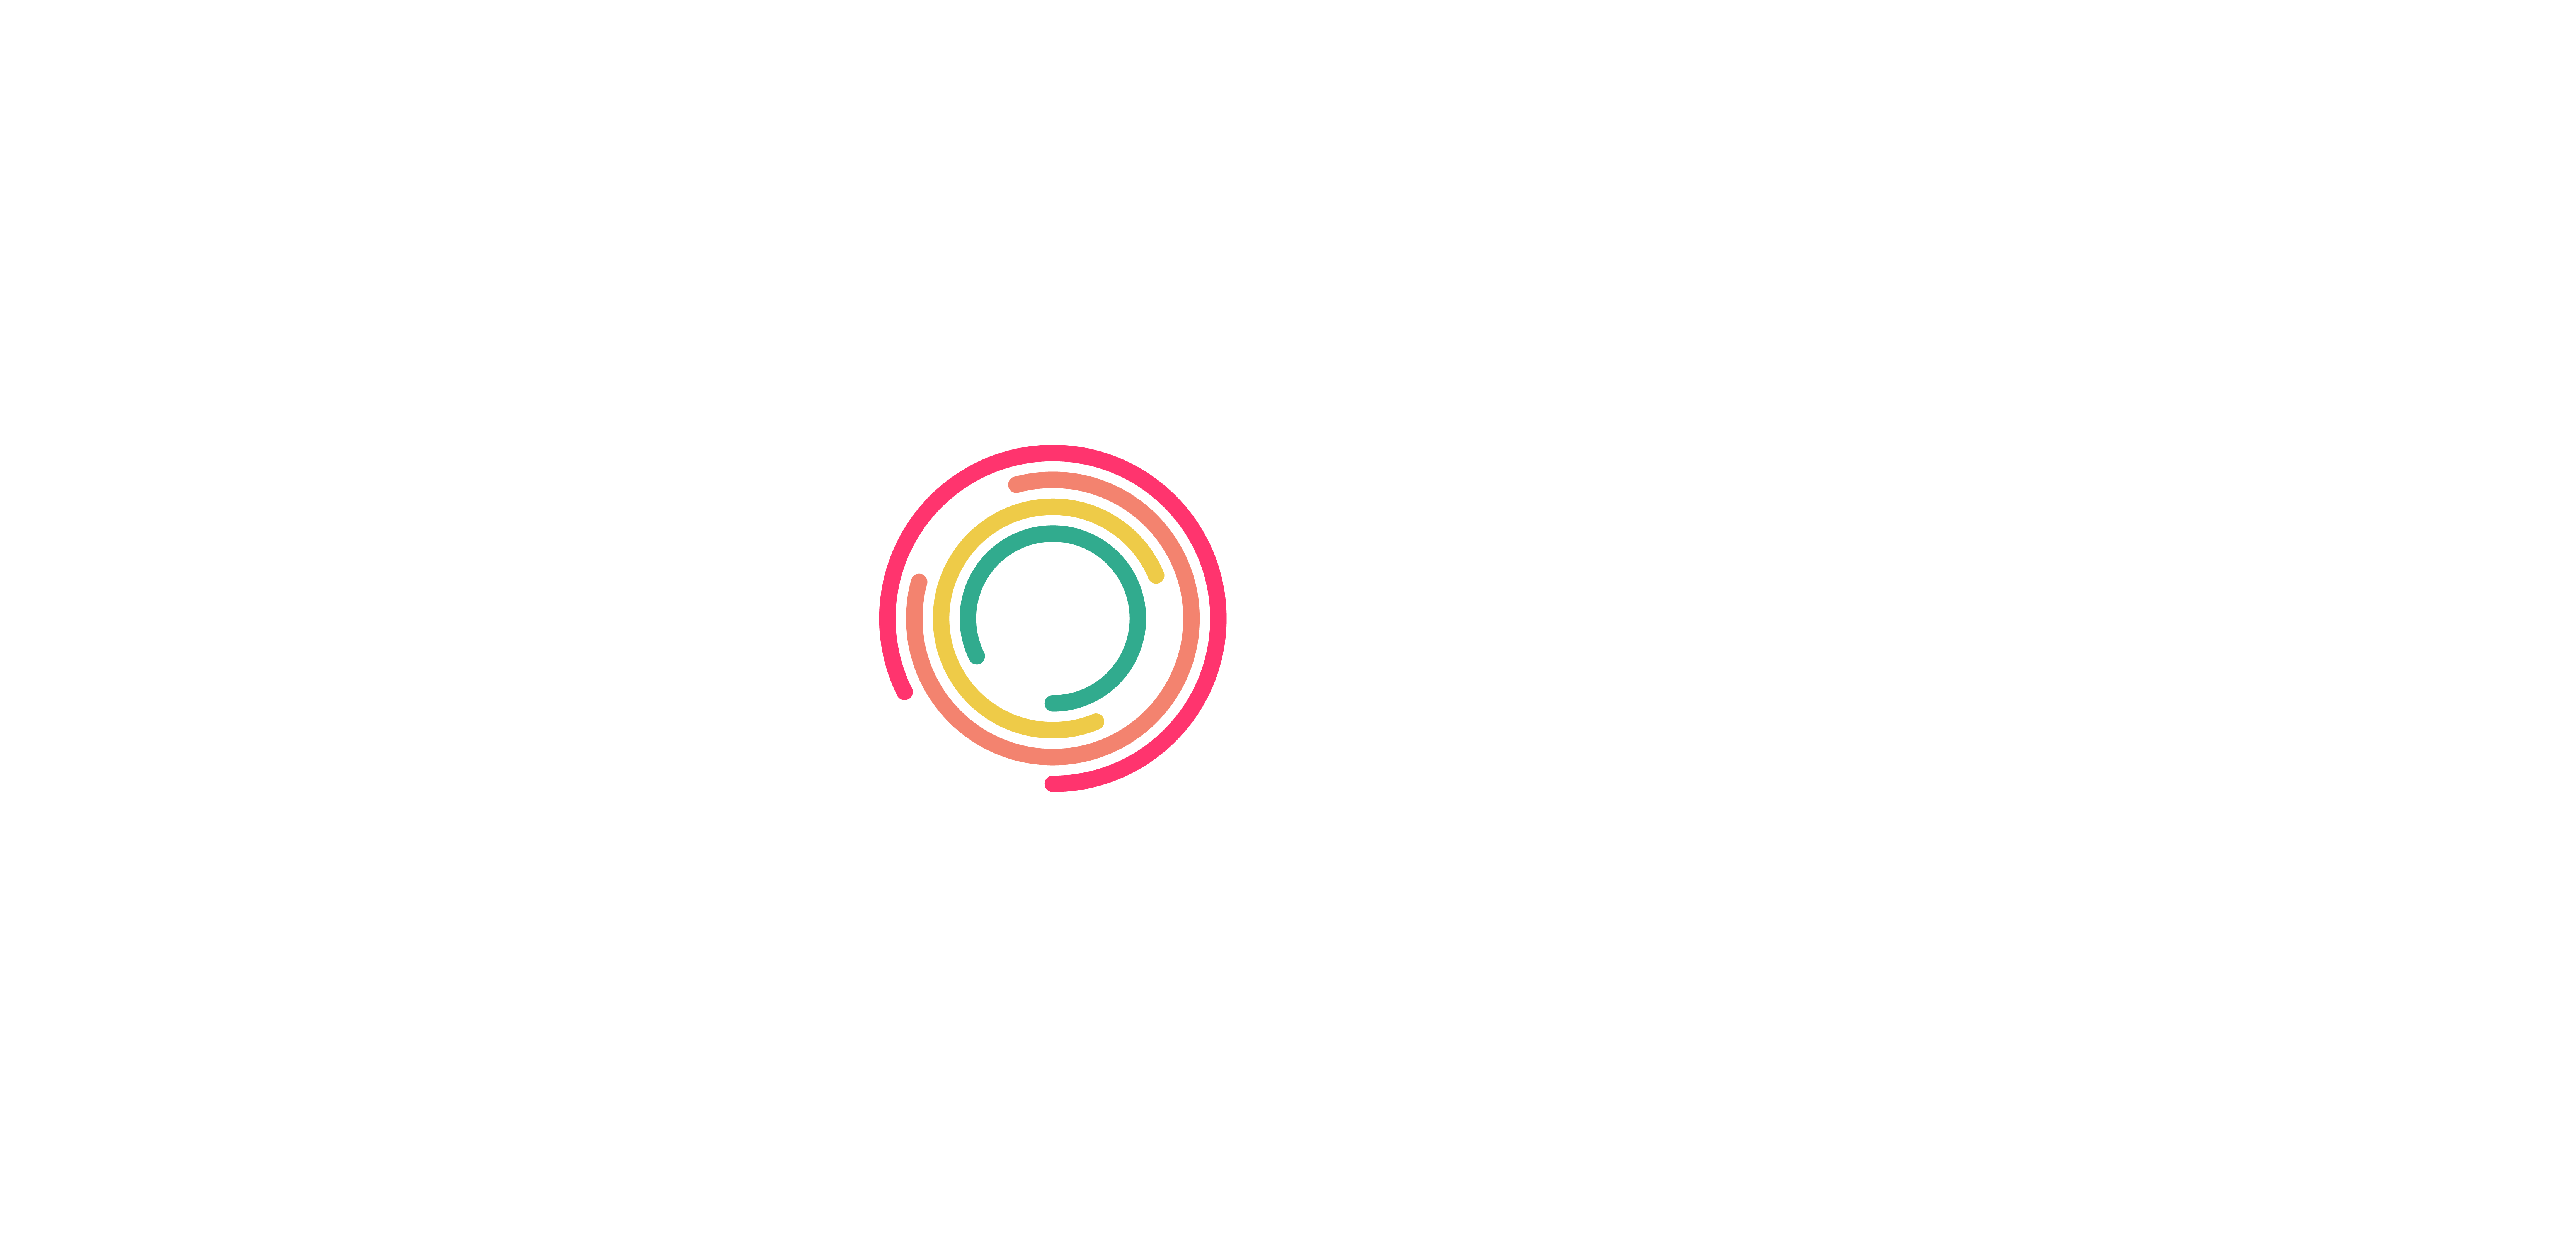 EO_Durban_RGB_inverse